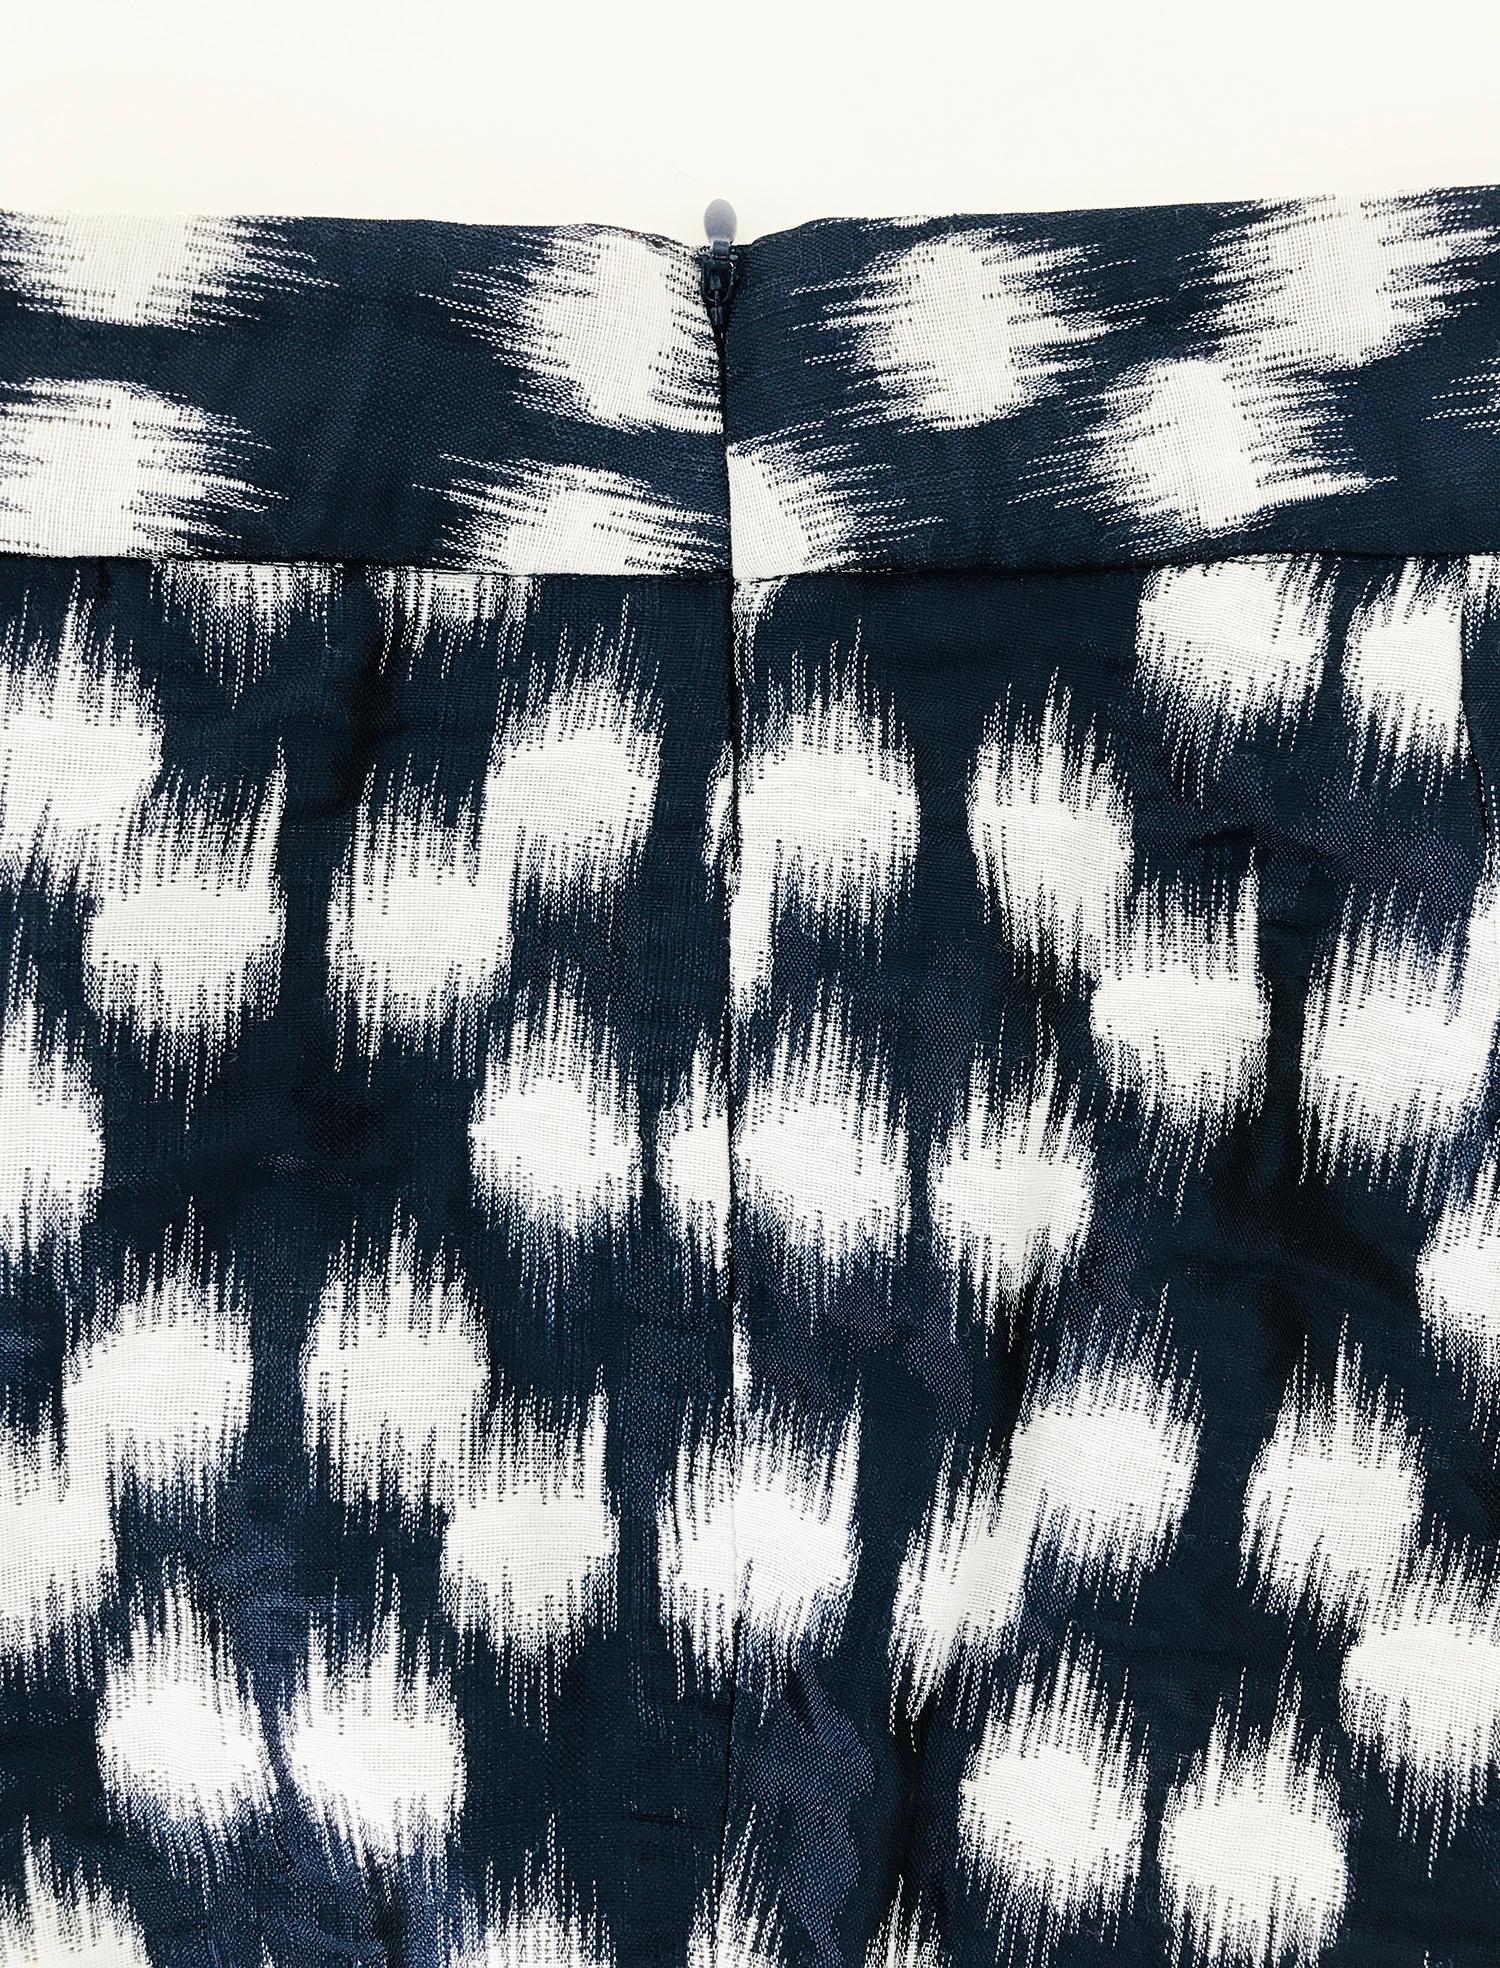 Josie Natori Ikat Woven Trouser in Blue Black Metallic & White  For Sale 3